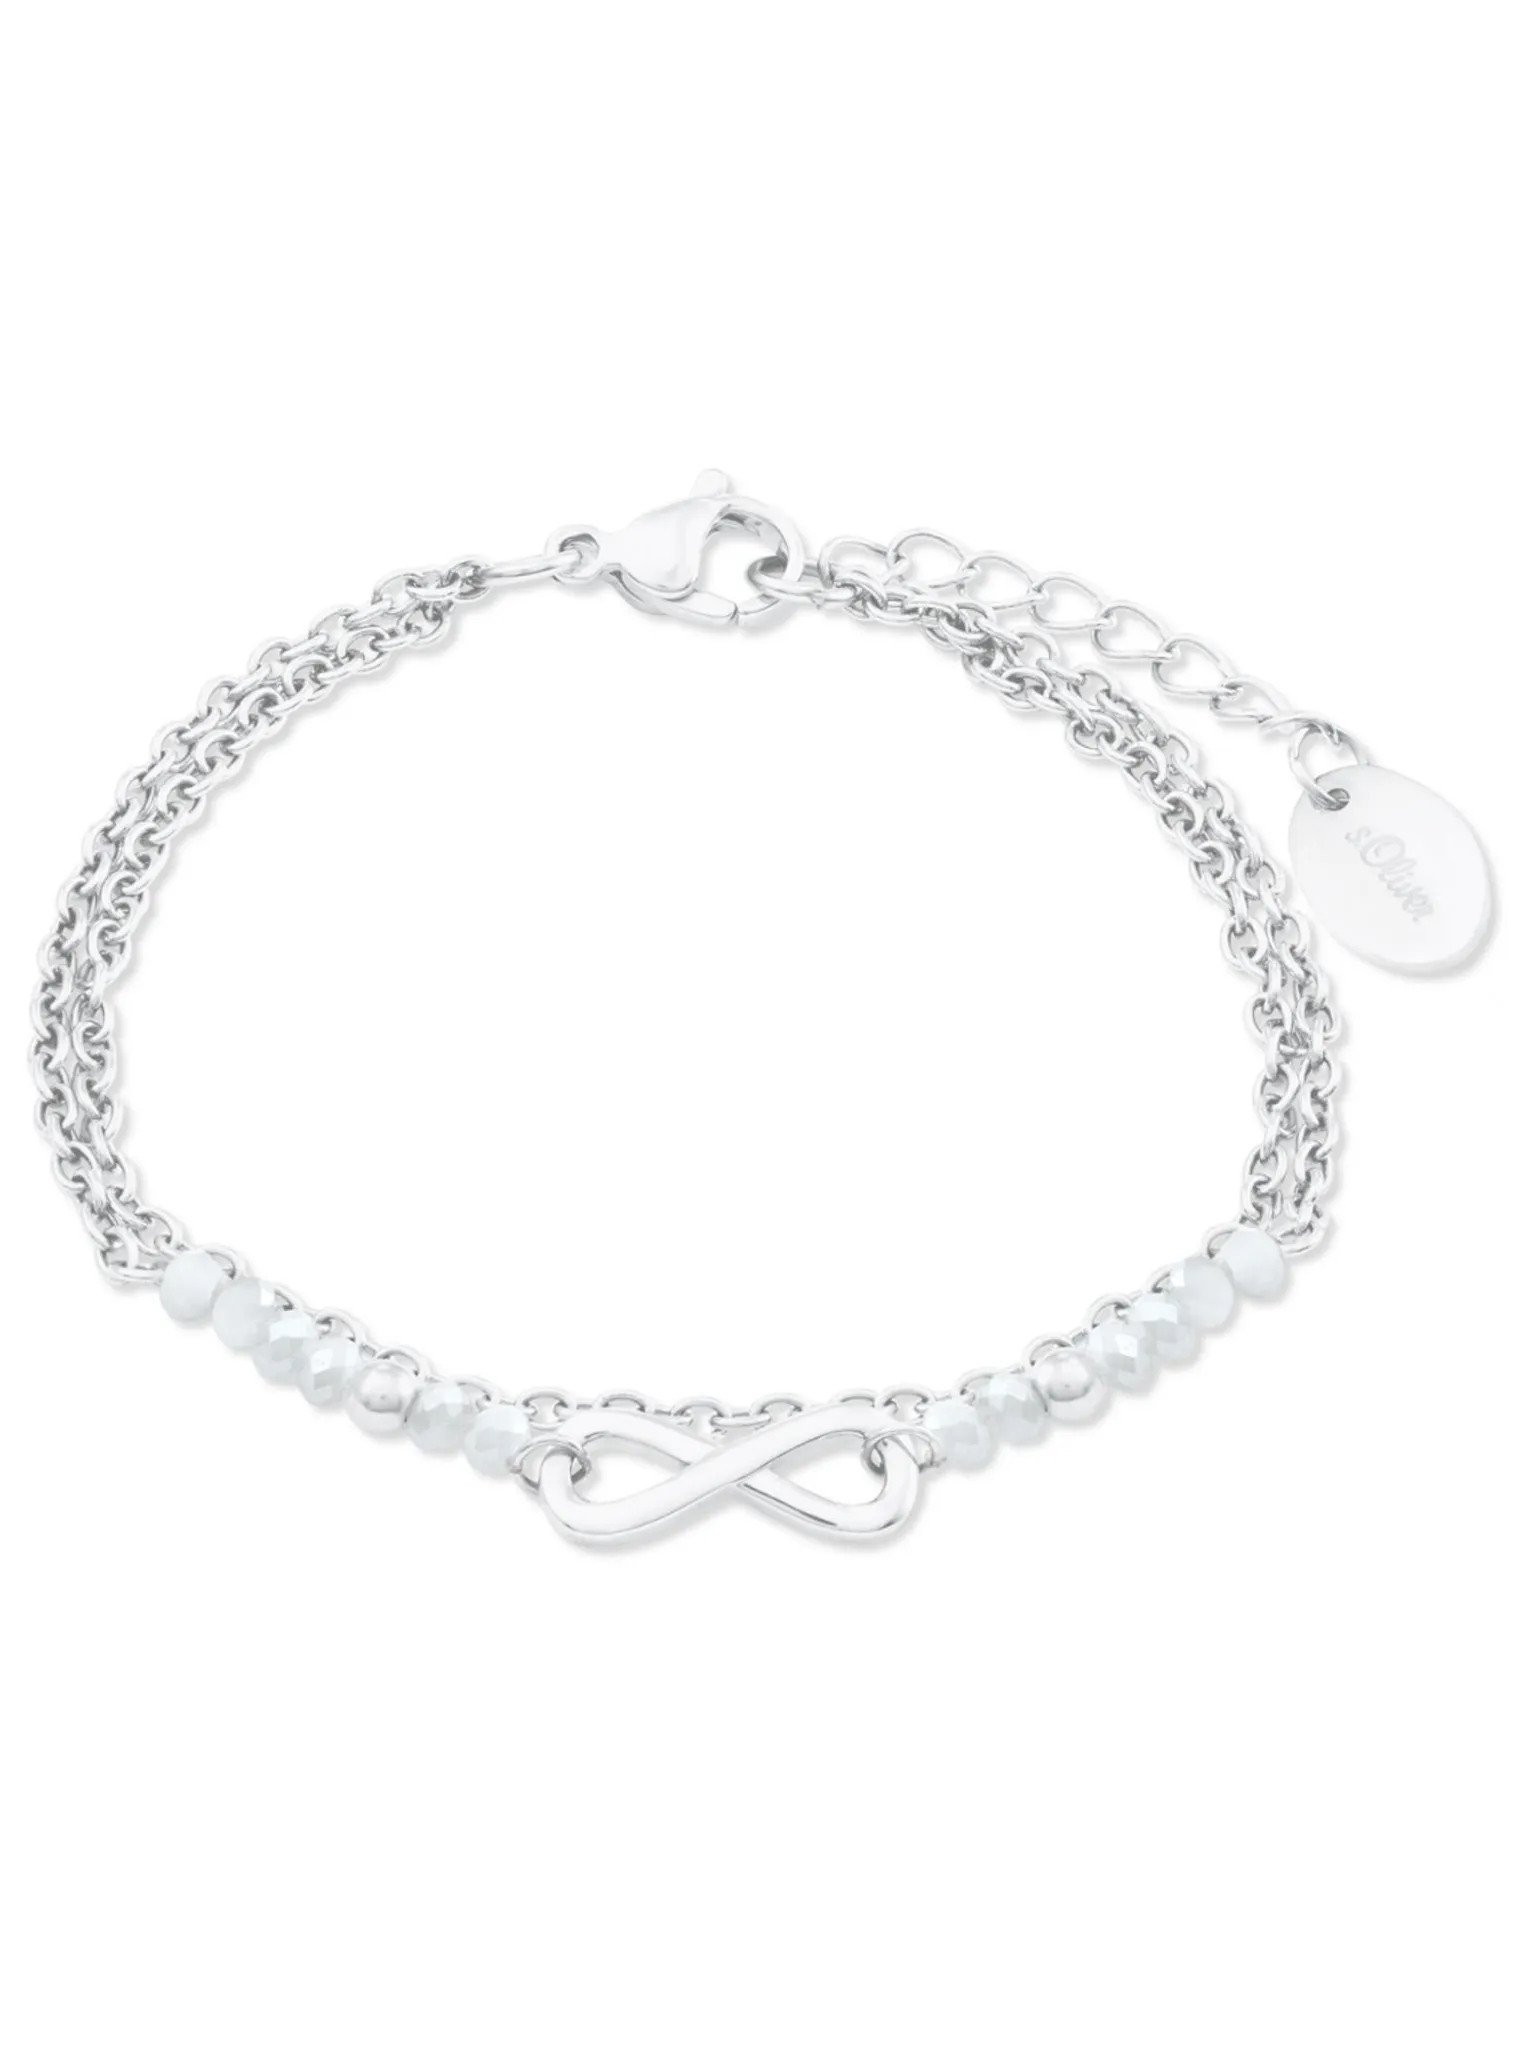 s.Oliver 2022717 Damen Armband Infinity Edelstahl Silber 20 cm